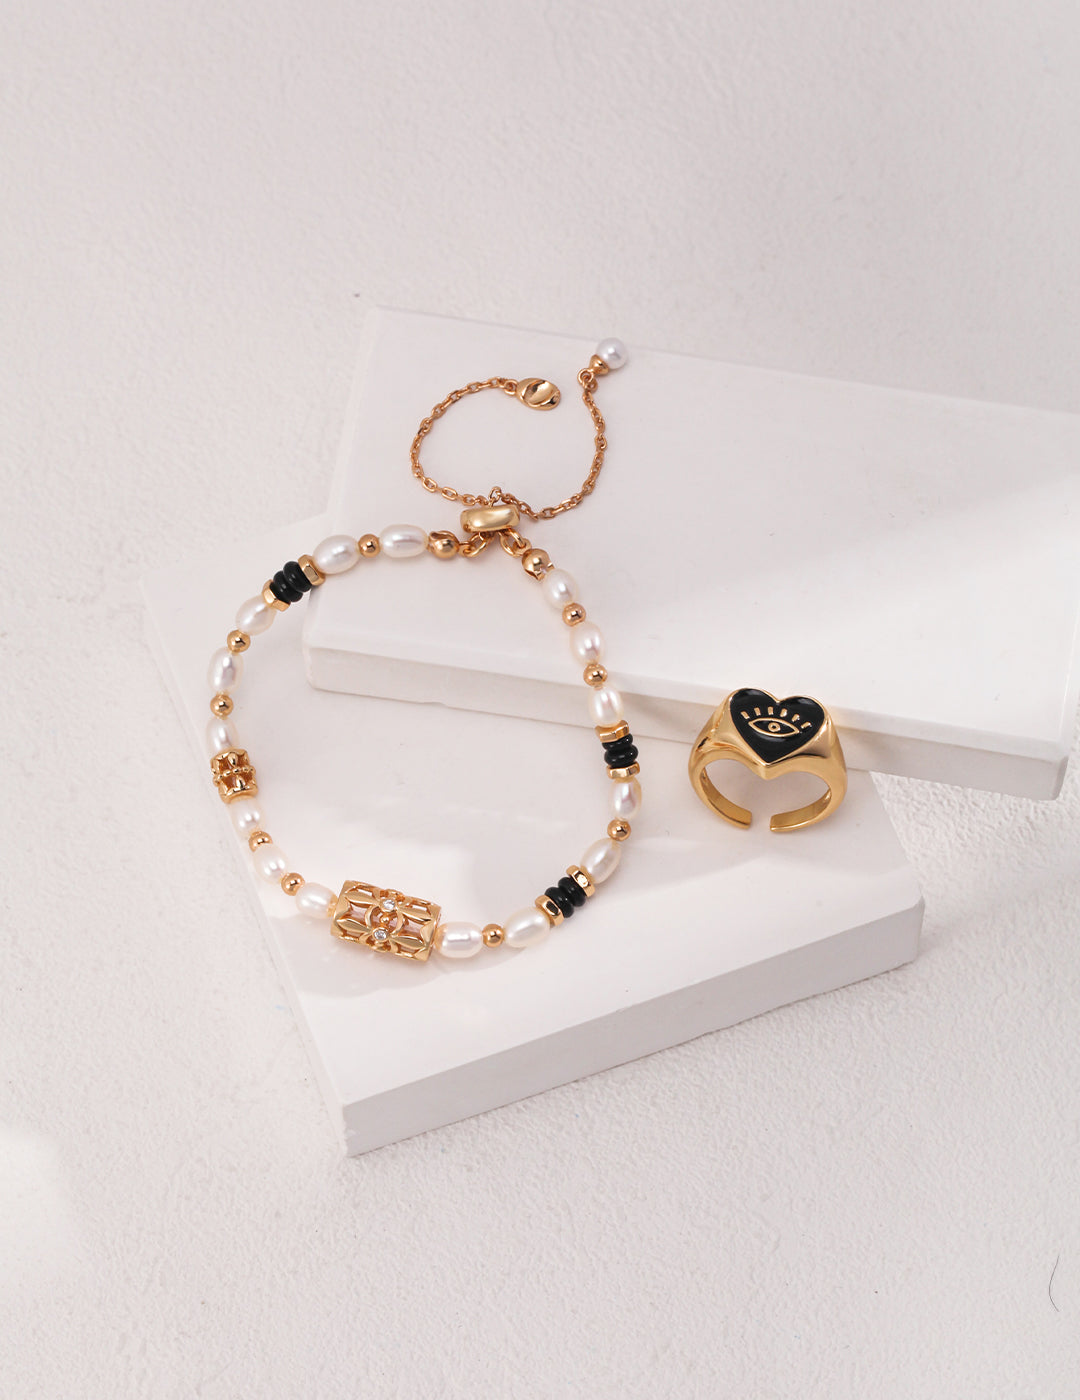 Sterling silver, pearl, onyx and zircon bracelet